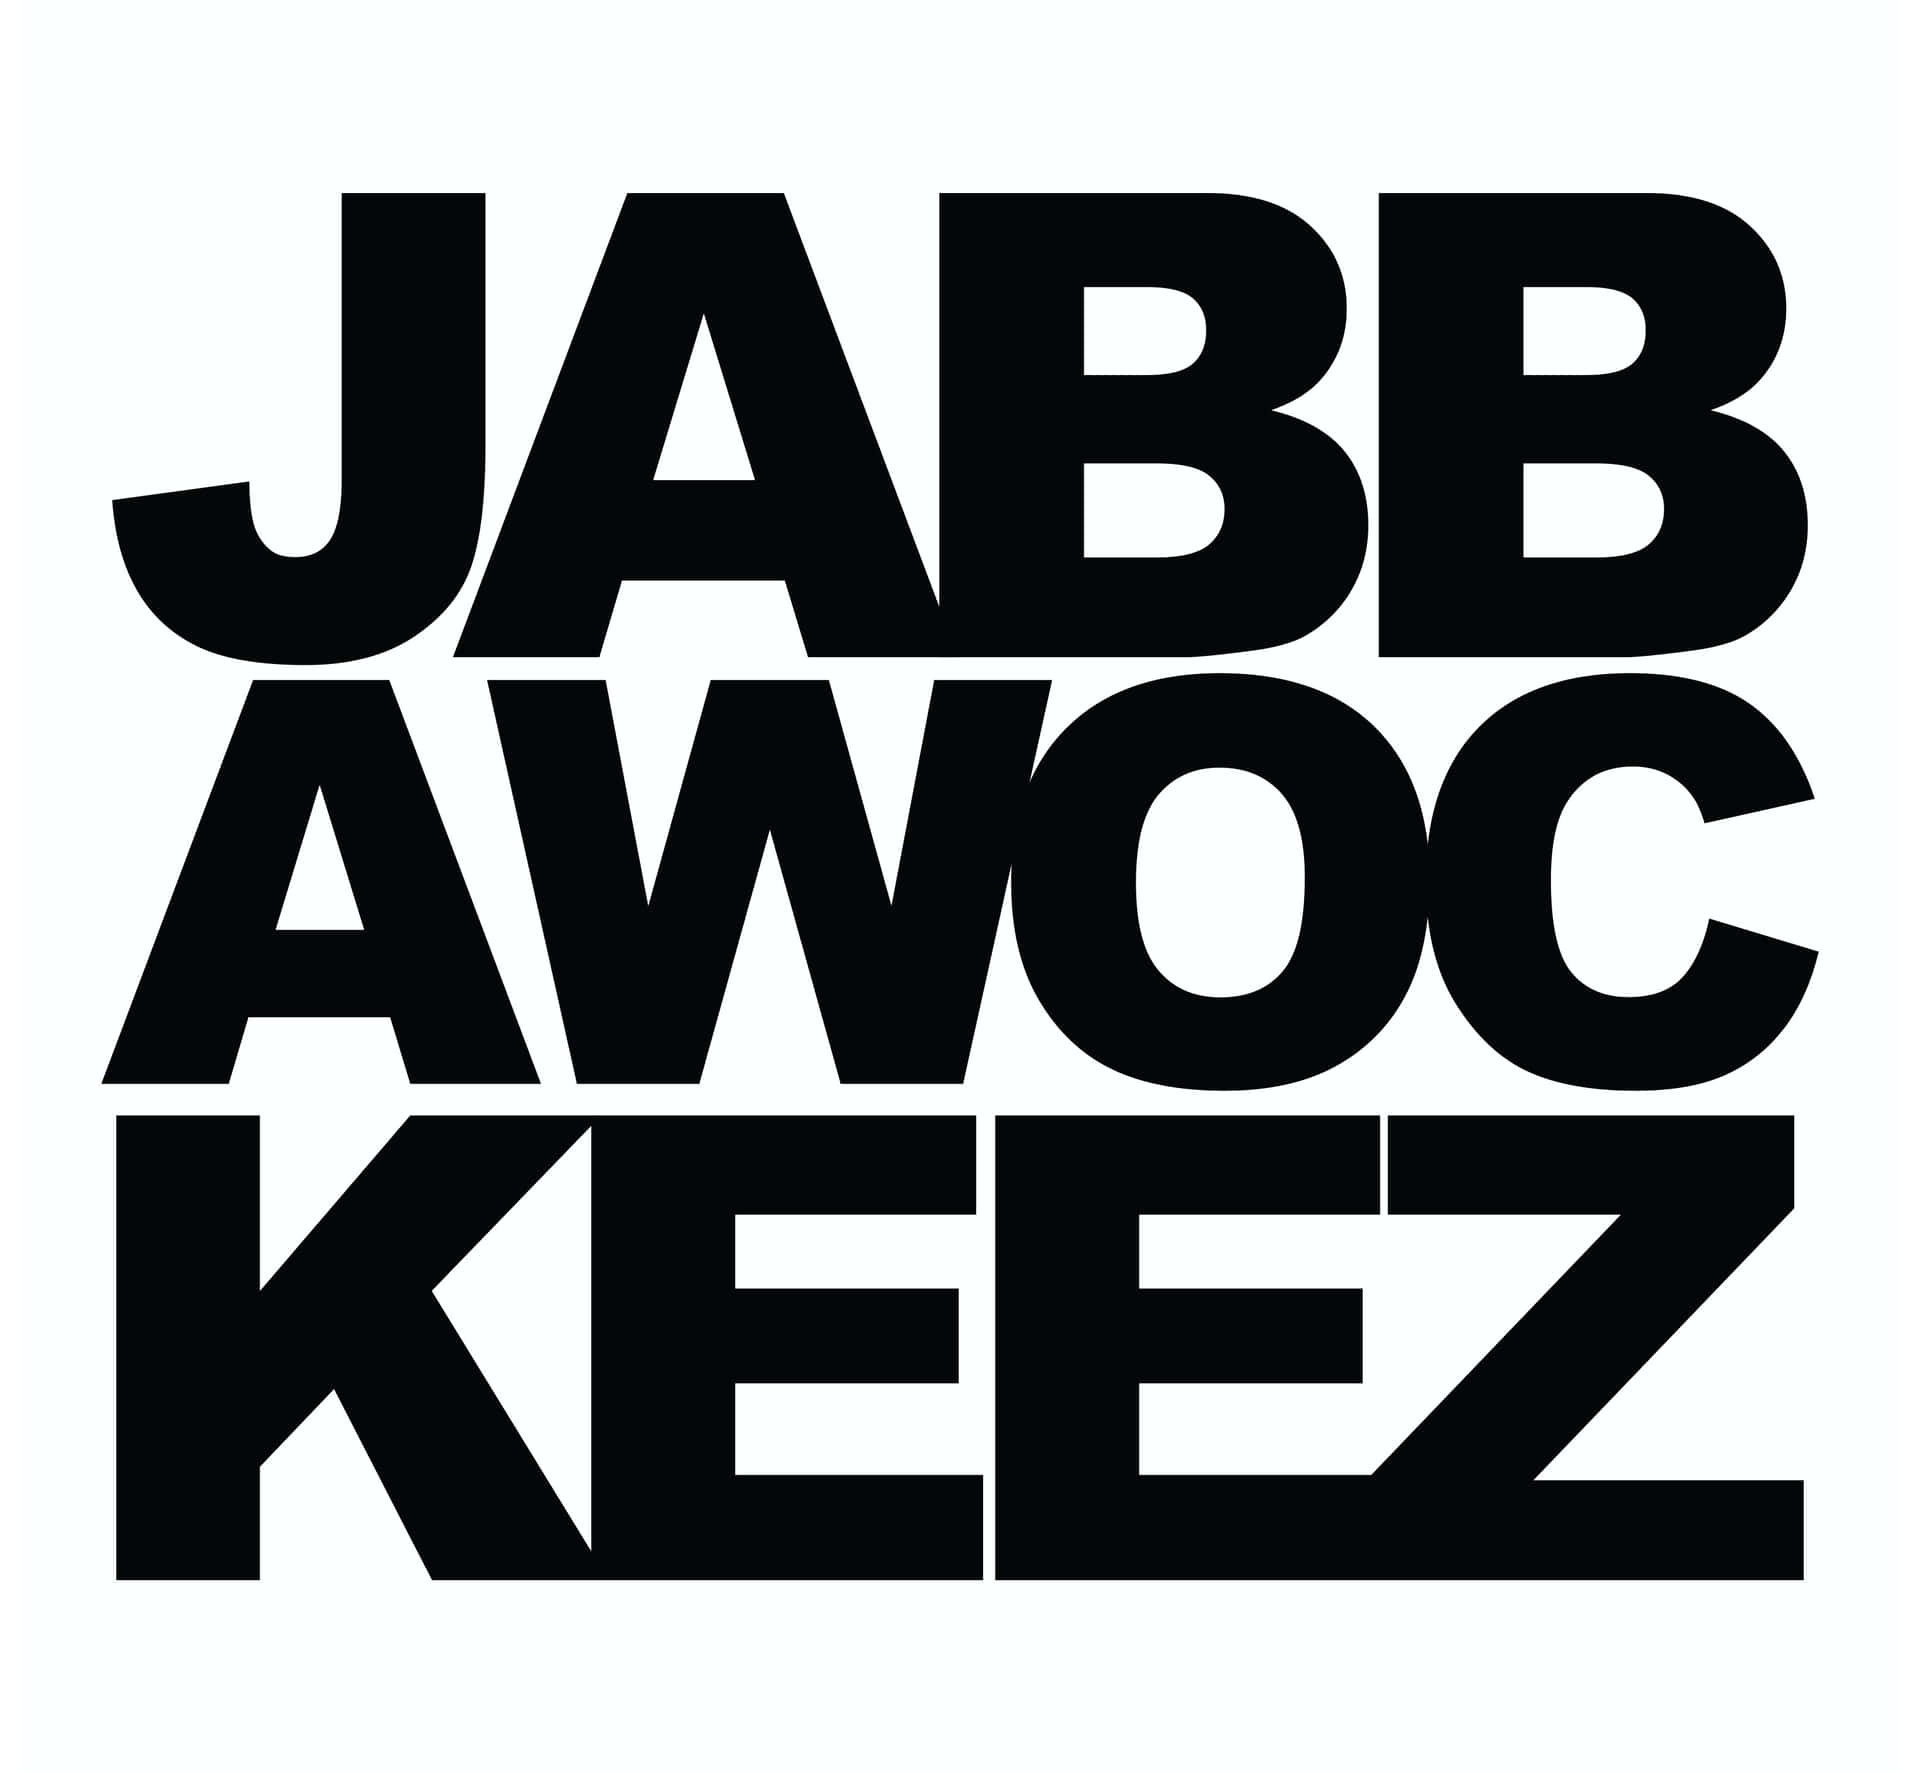 Black Jabbawockeez Log Word On White